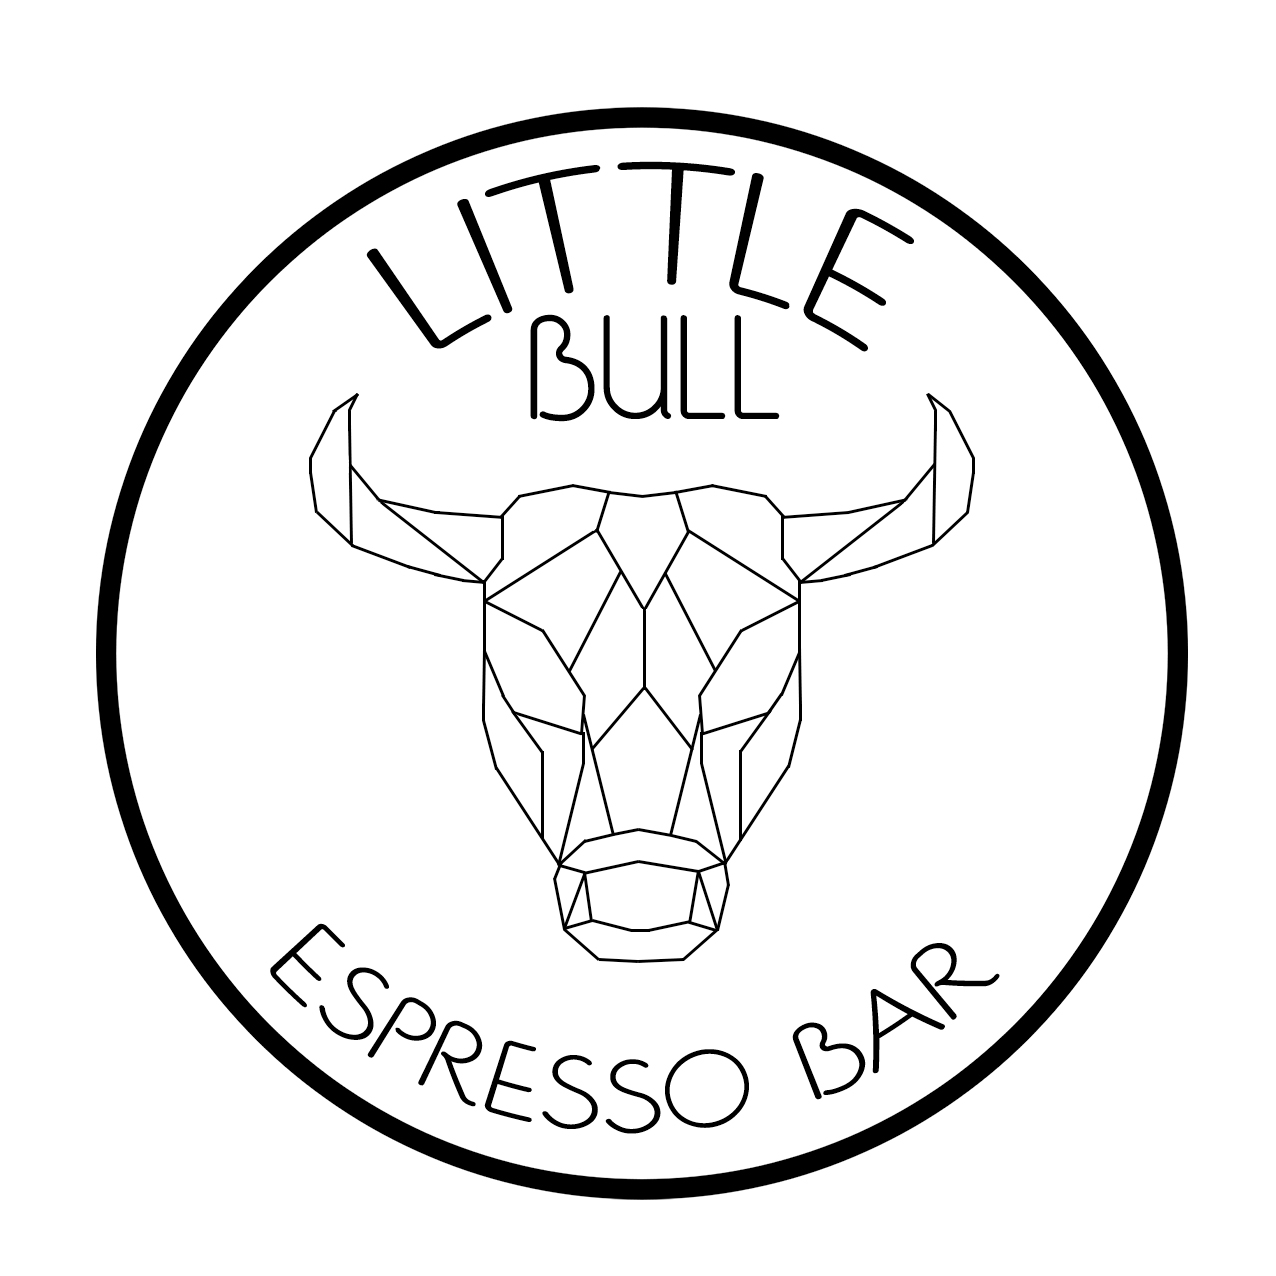 Little Bull Espresso Bar